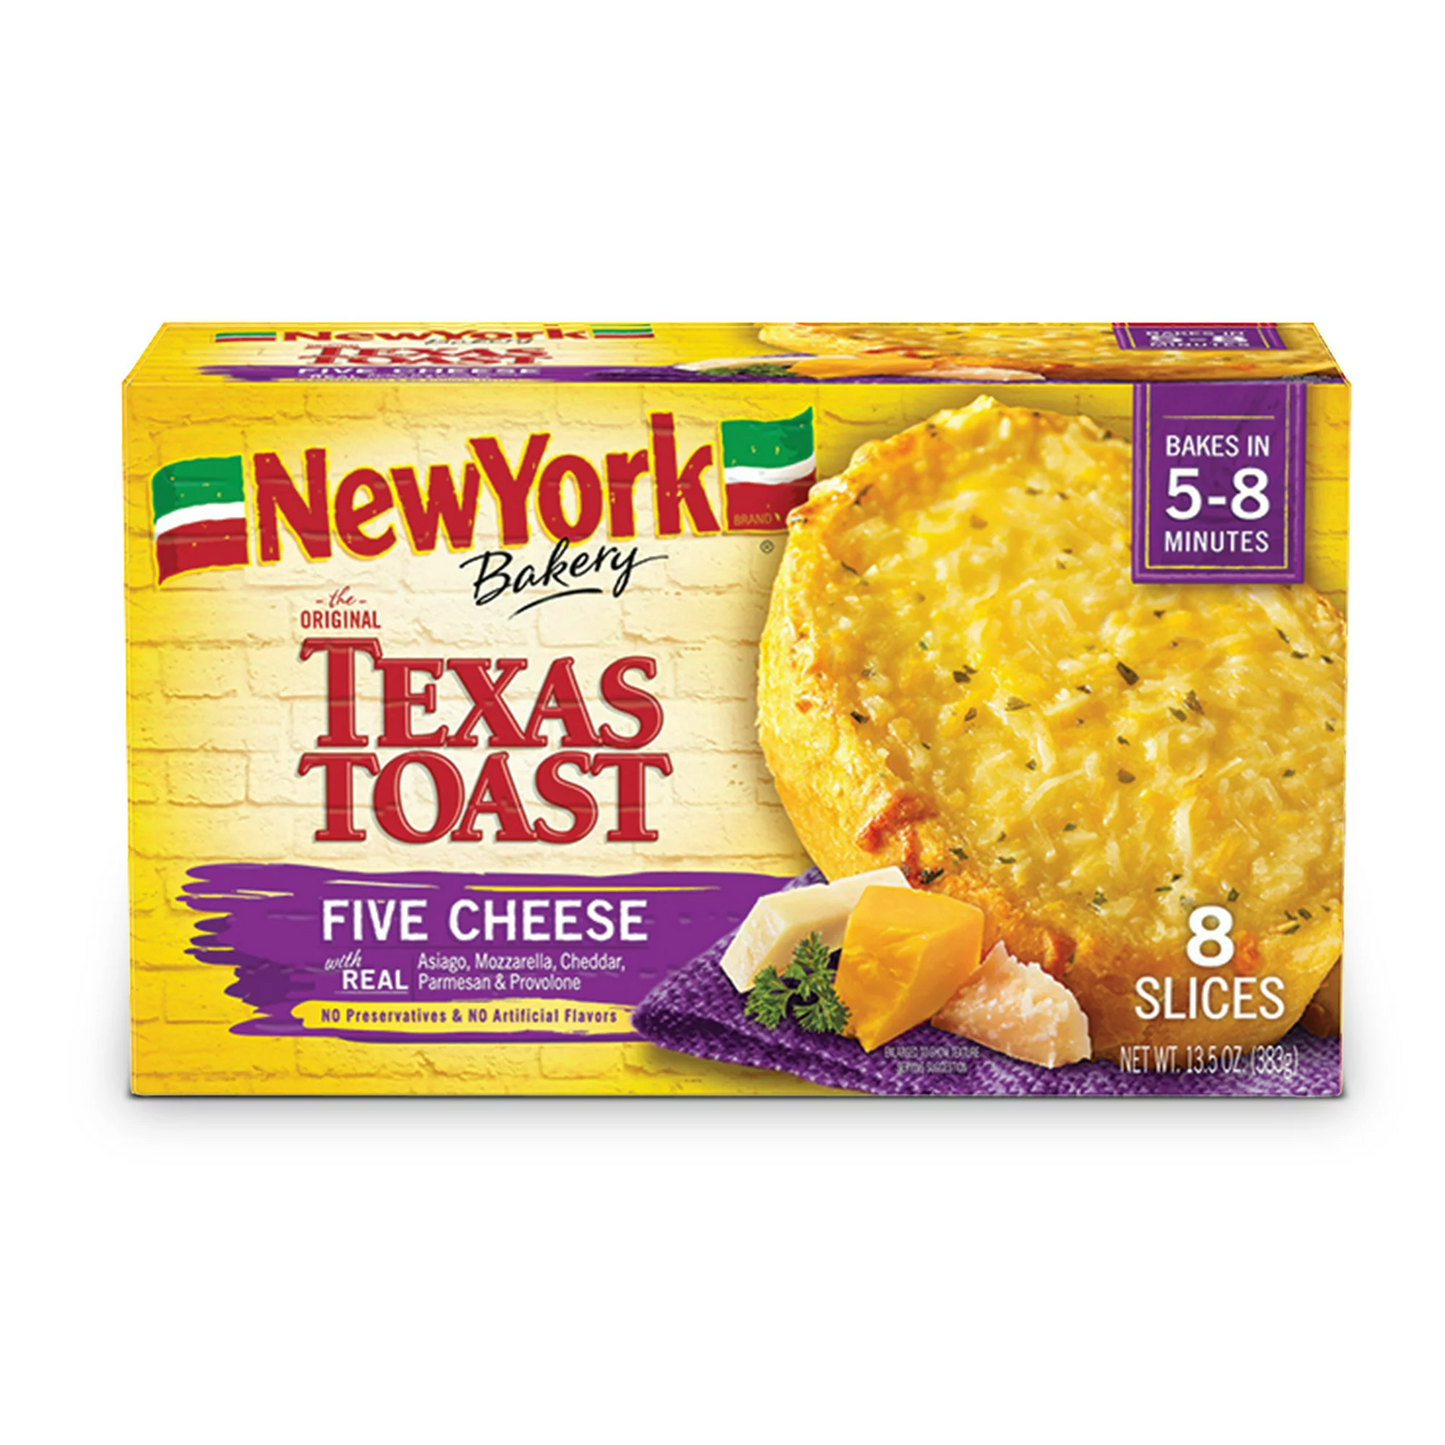 New York Bakery The Original Texas Toast Five Cheese, 13.5 oz Box